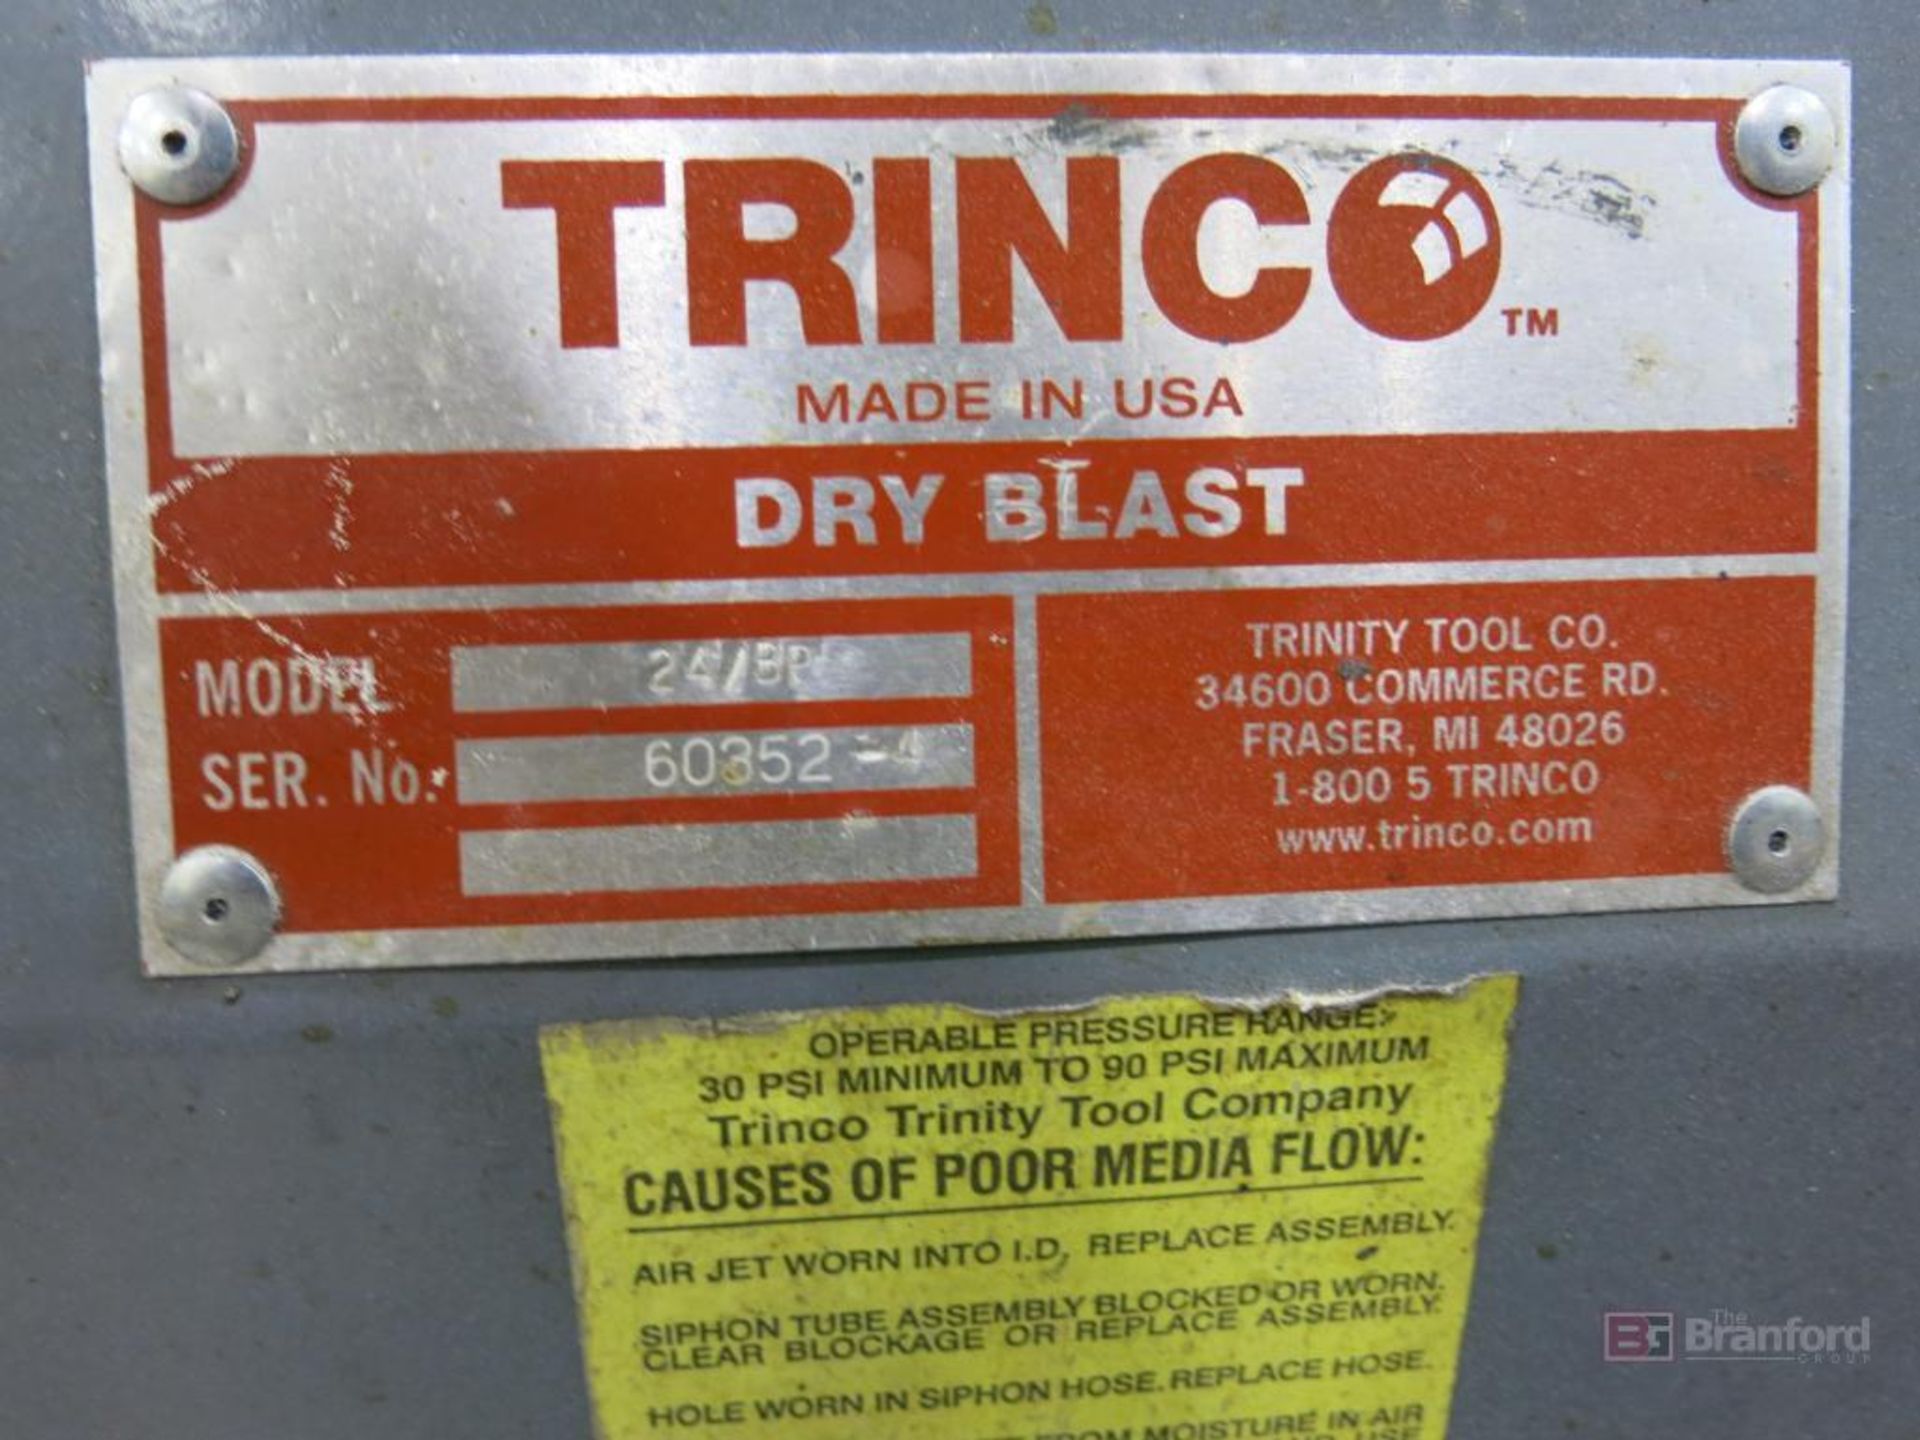 Trinco Model 24/BP Sand Blast Cabinet - Image 2 of 2